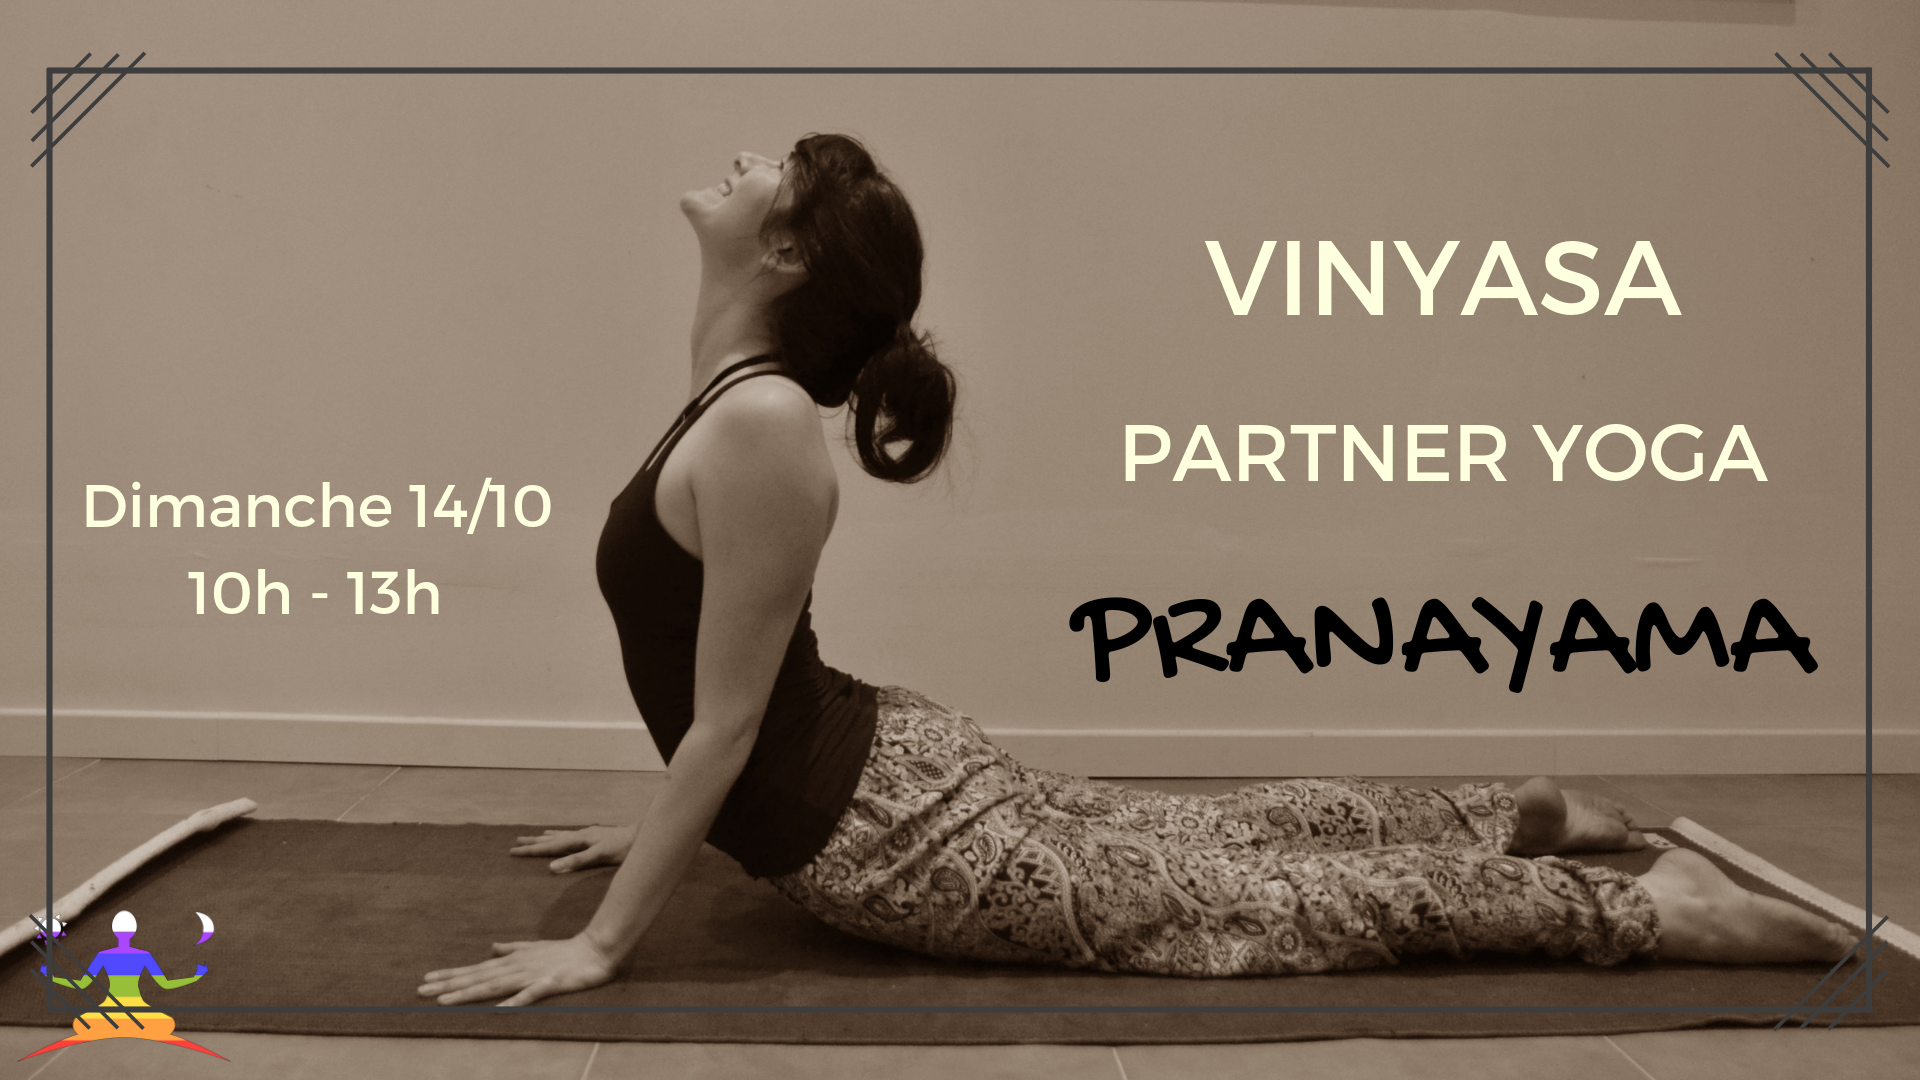 Stage mensuel : Yoga Vinyasa, Partner Yoga et Pranayama